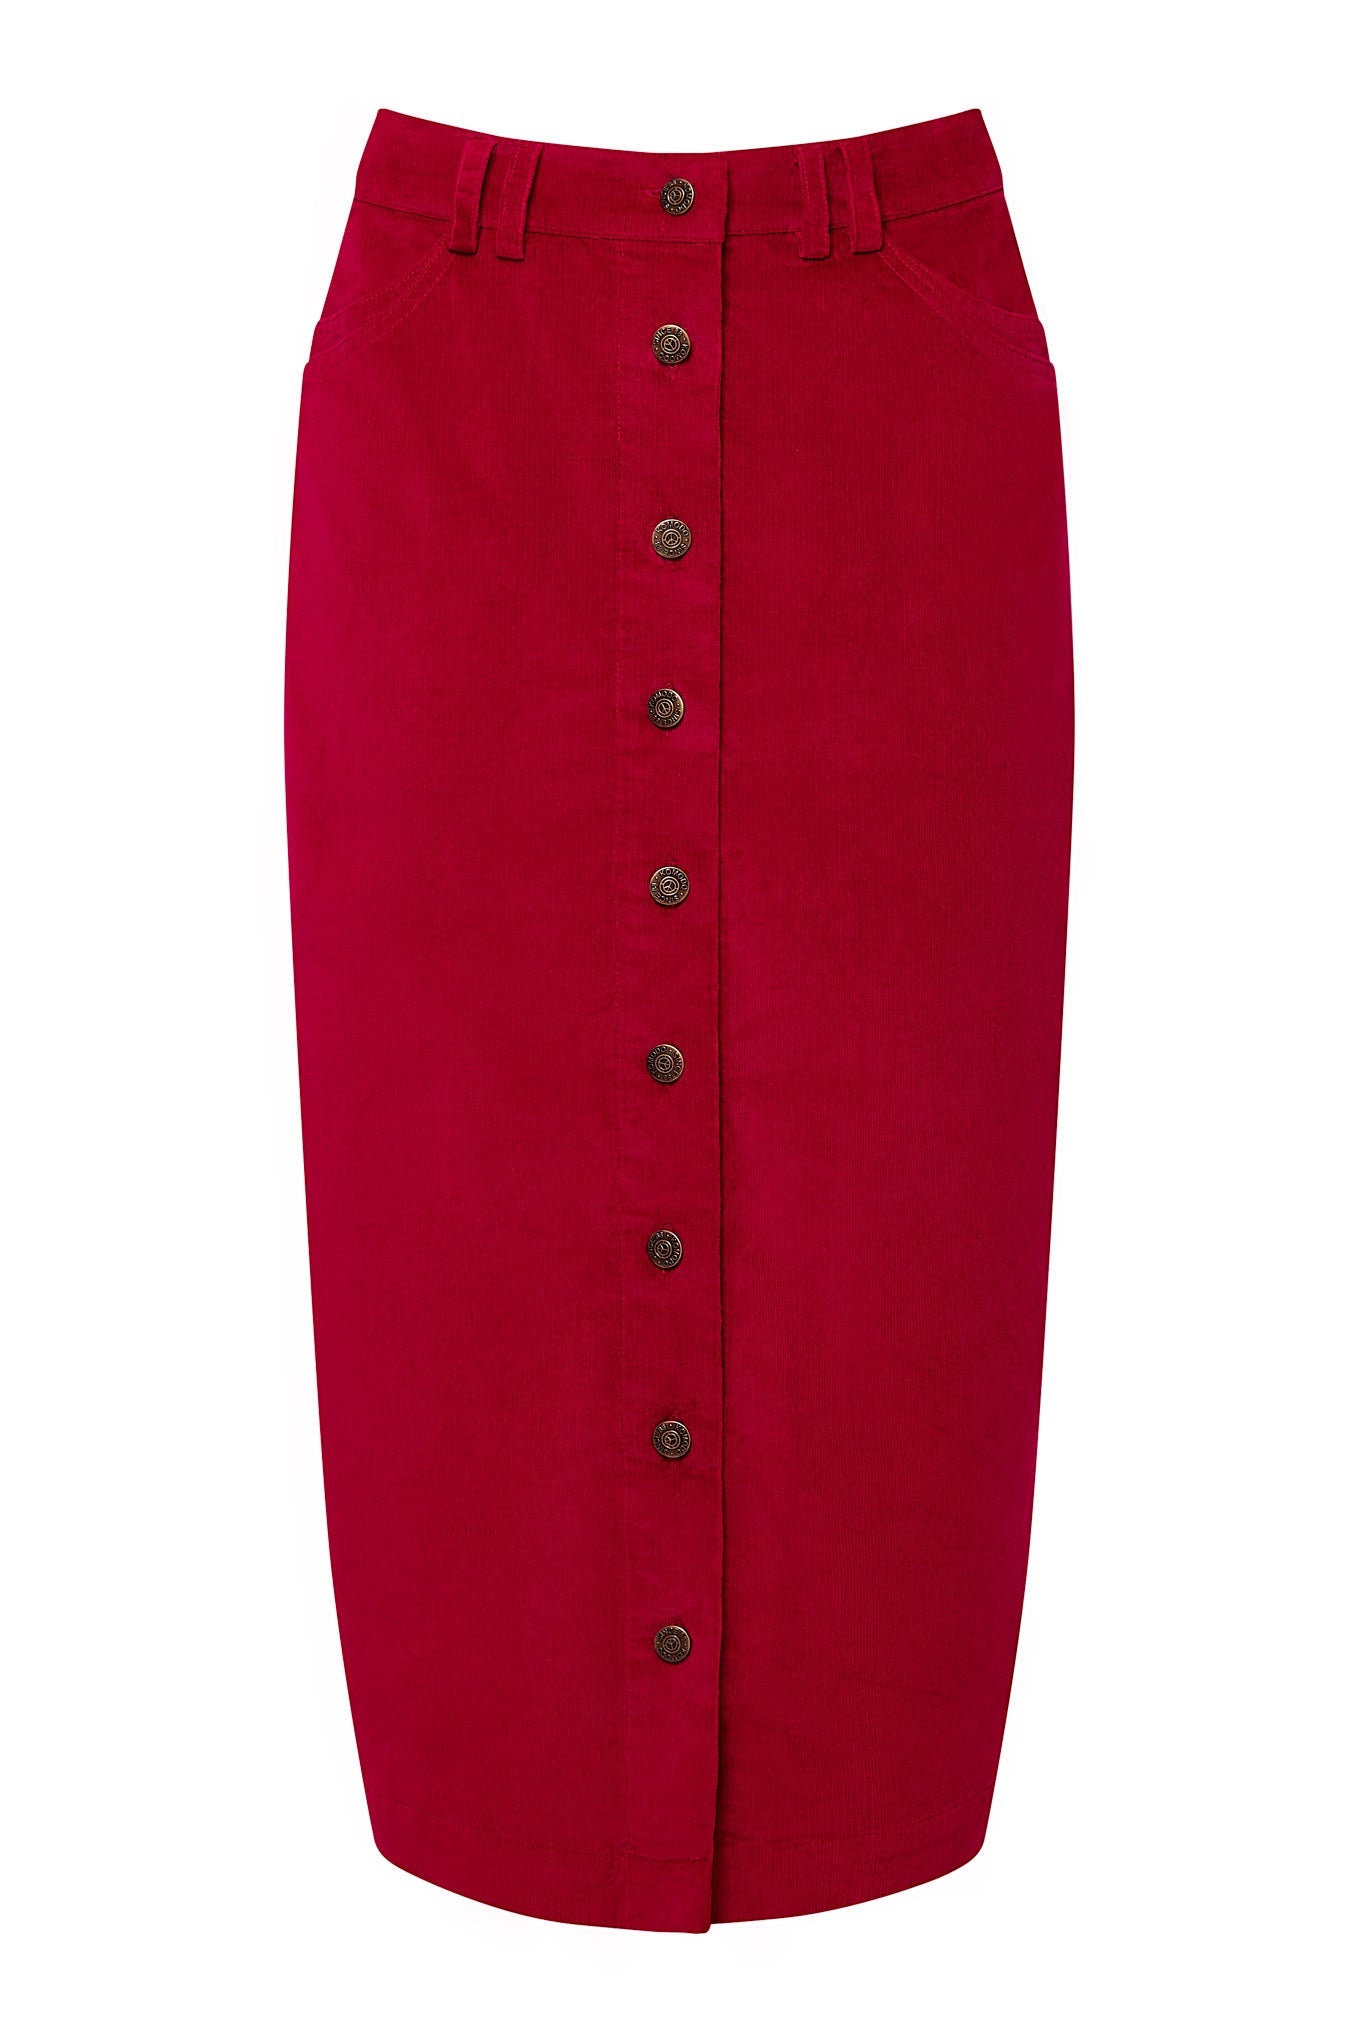 Red corduroy skirt ISABEL made of organic cotton by Komodo 